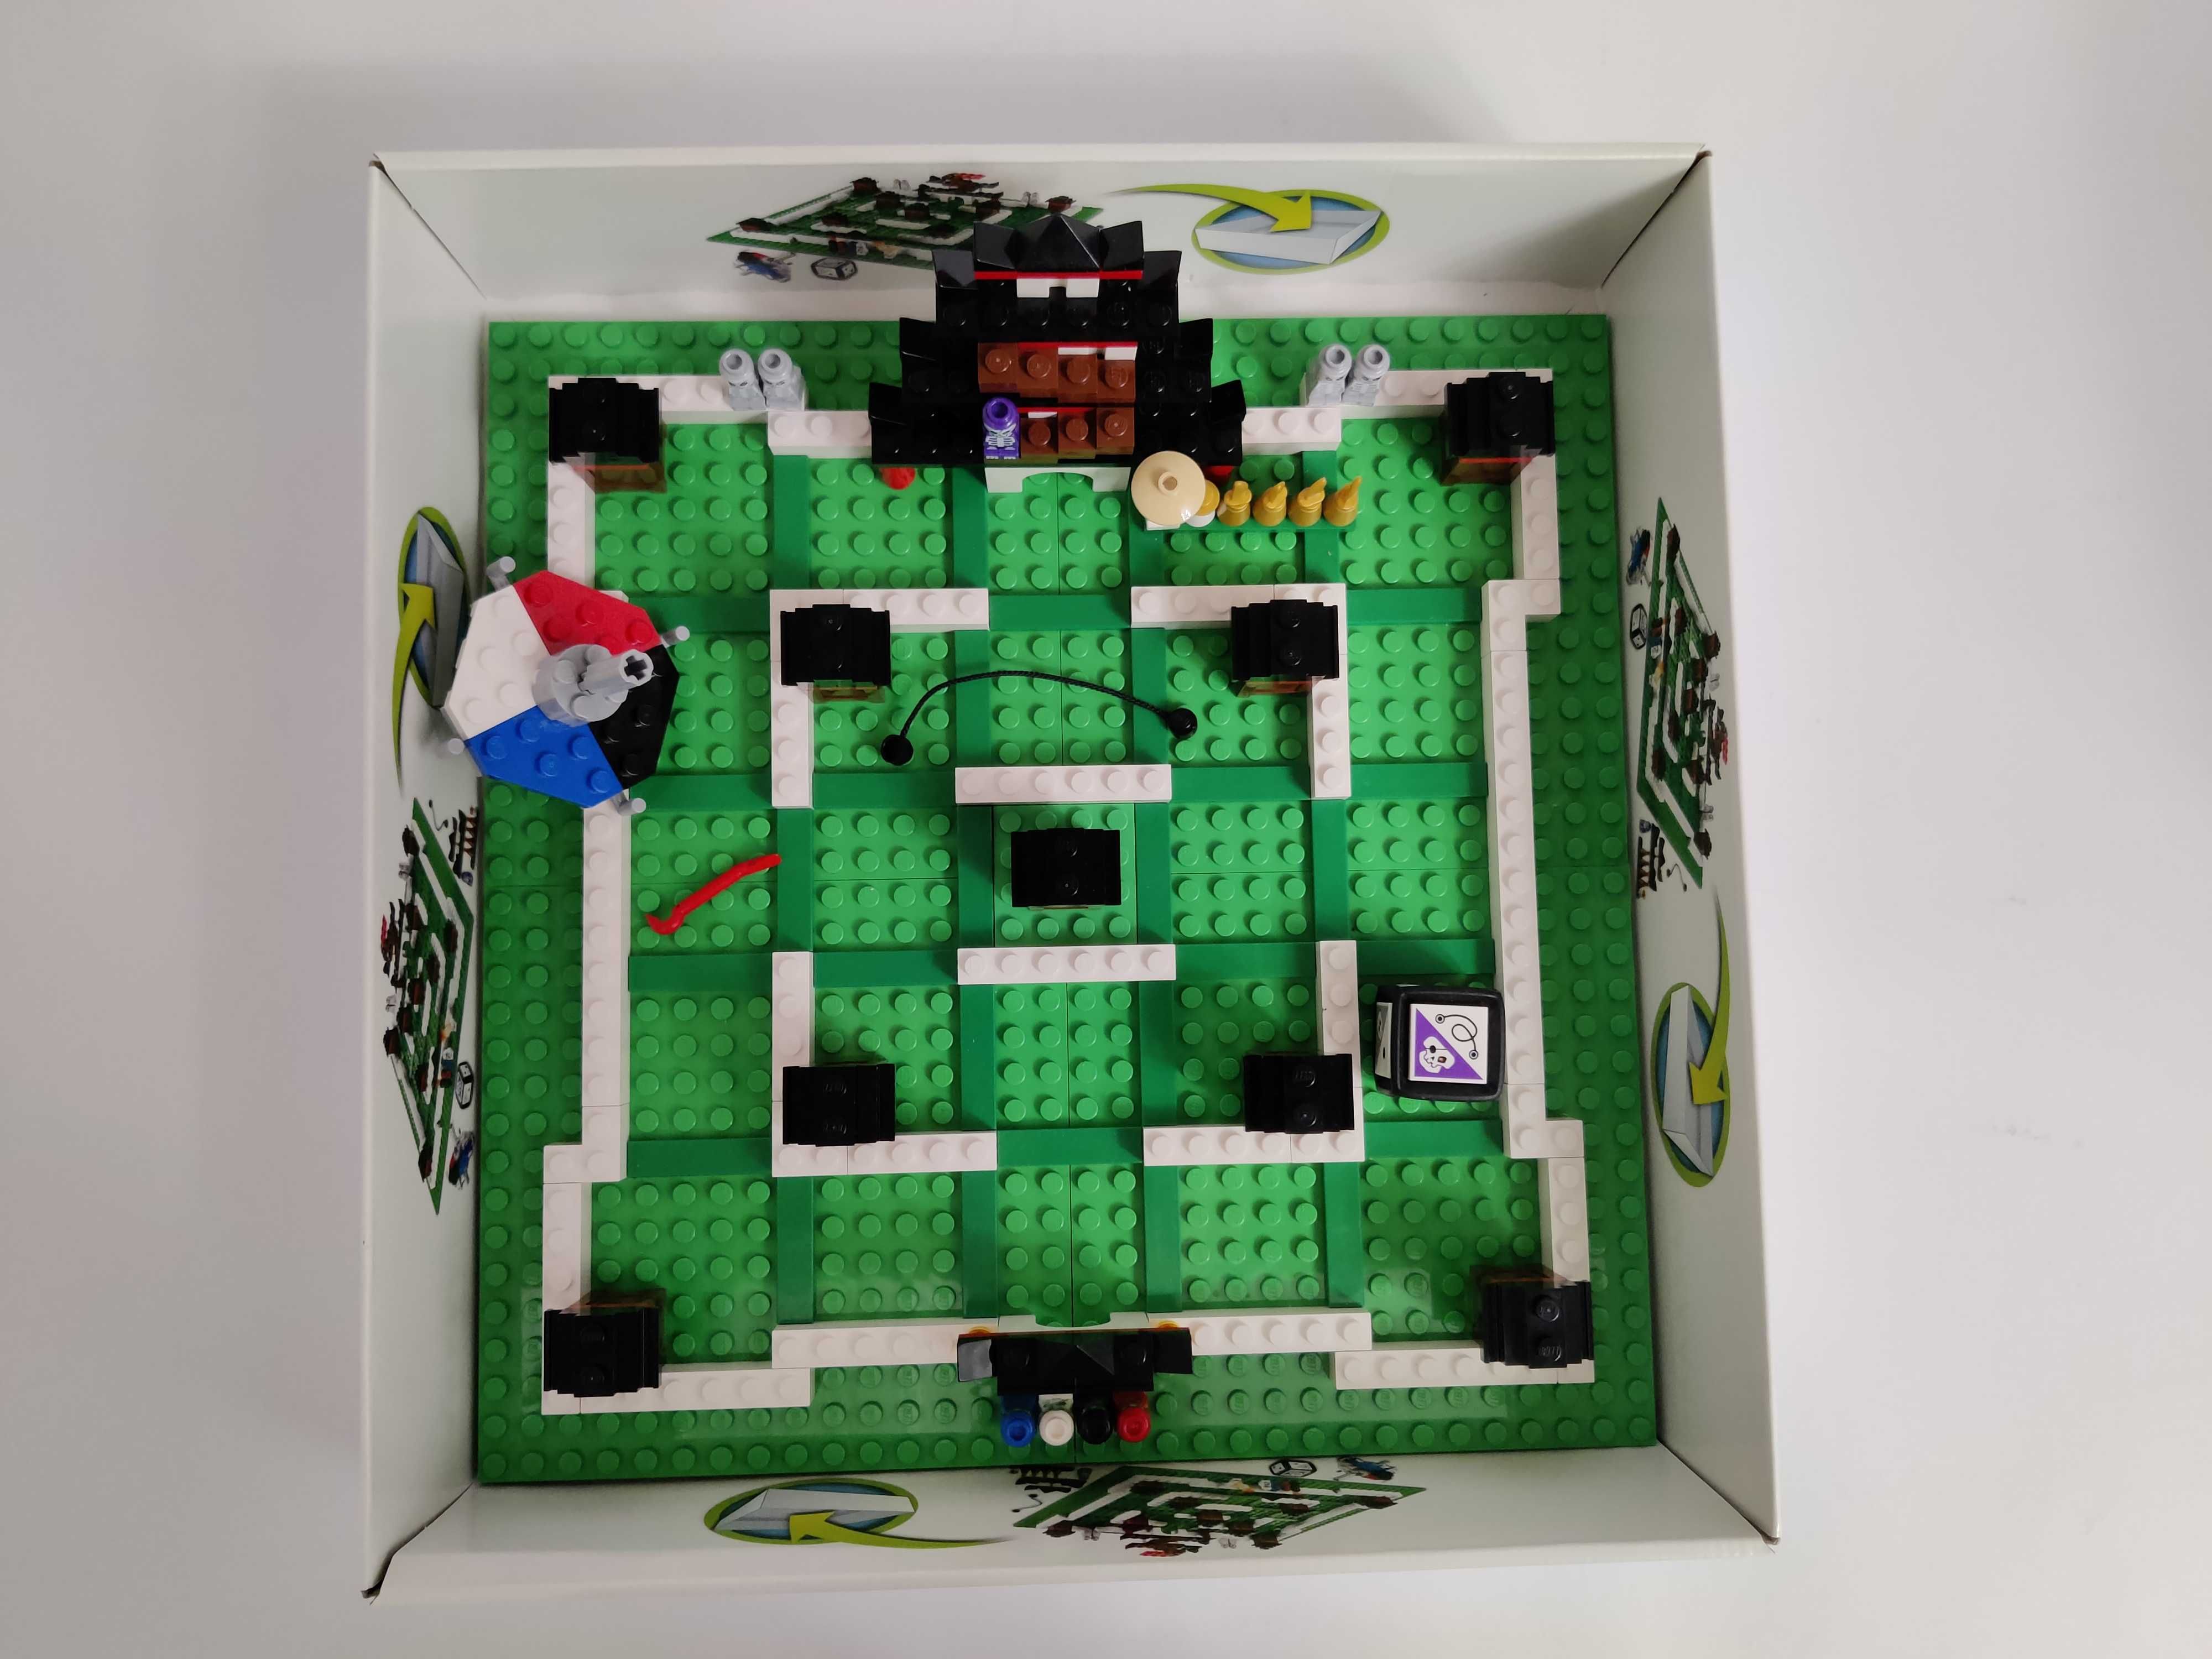 LEGO Ninjago Gra The Board Game 3856